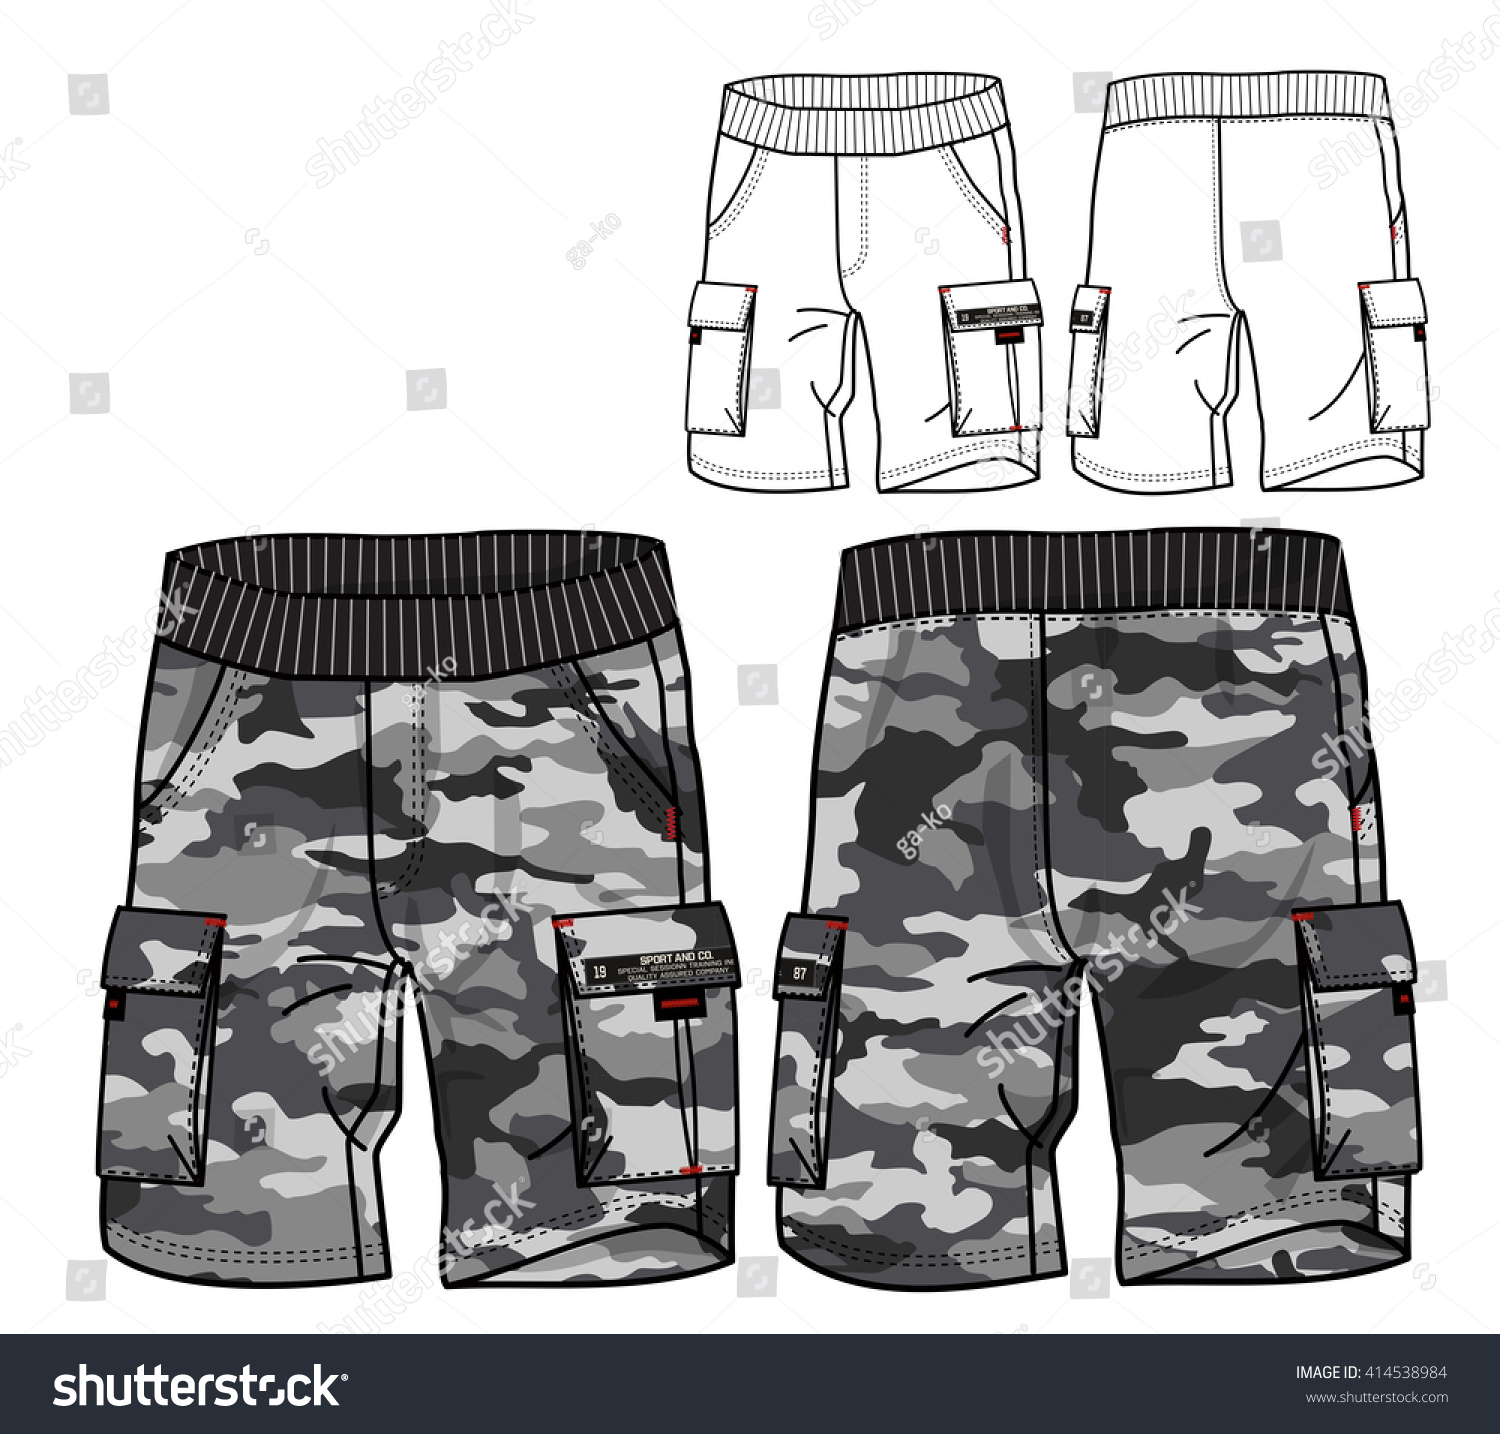 Cargo Pants Vector Template(Camo Print) - 414538984 : Shutterstock